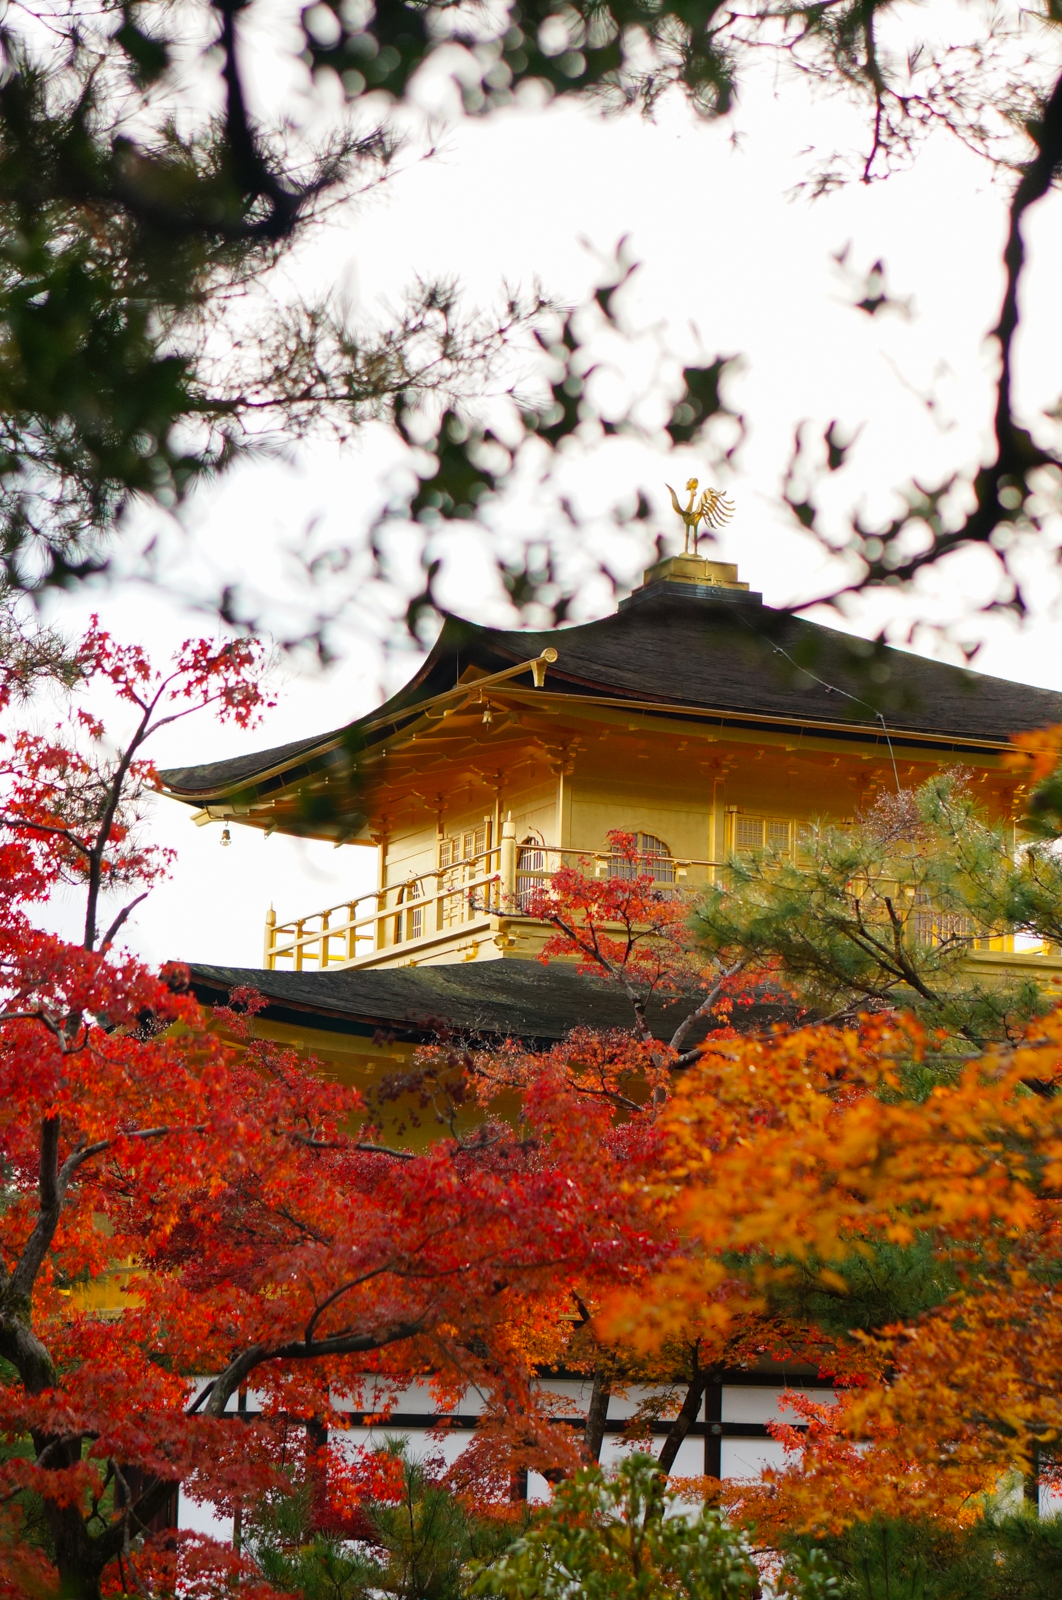 Kyoto, momiji kyoto, voyage kyoto, séjour kyoto, kyoto automne, kyoto fall, kyoto autumn, kyoto érables, kinkaku-ji, temple du pavillon d'or